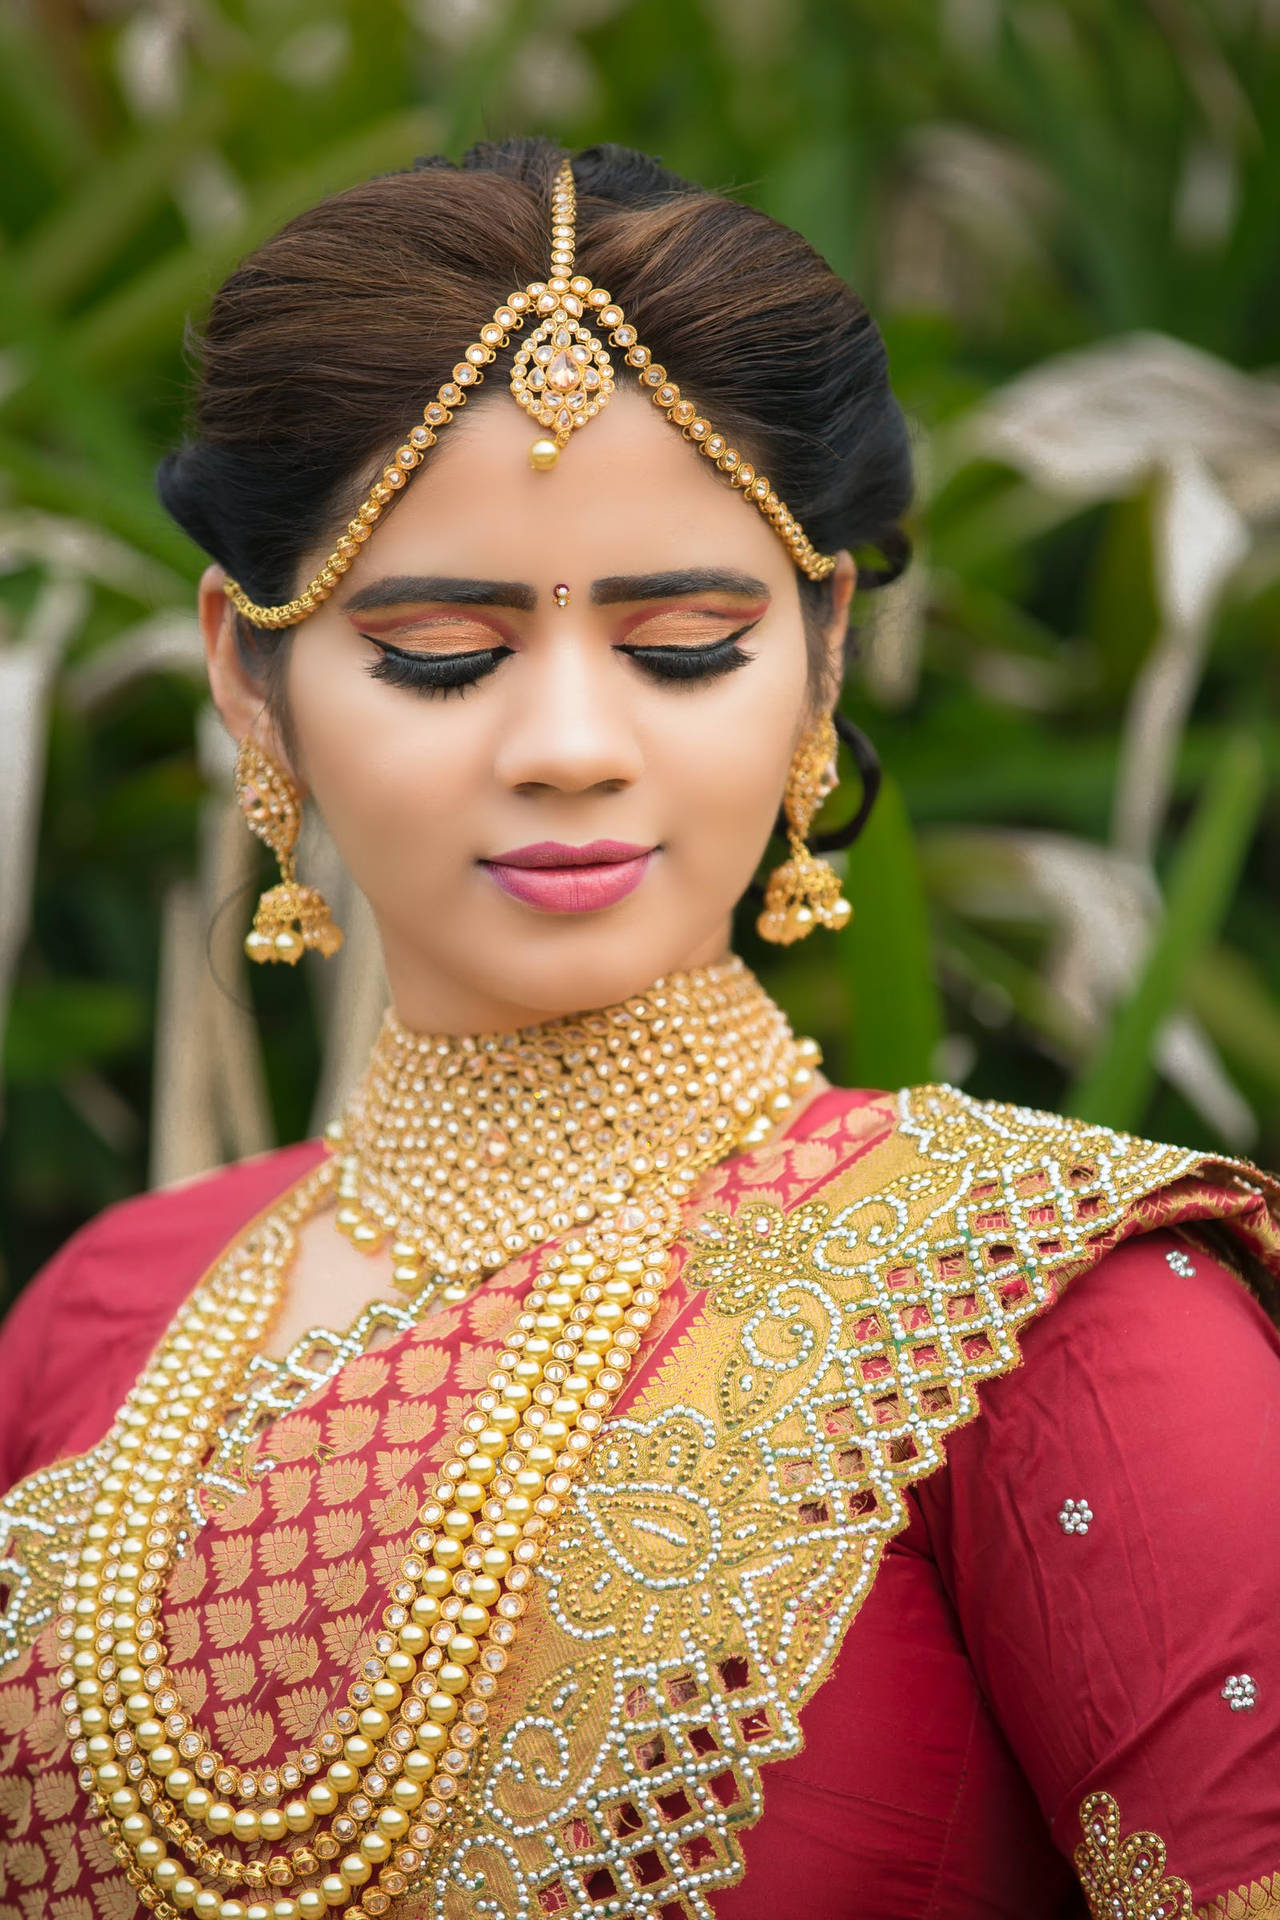 Woman Gold Jewelry Indian Wedding